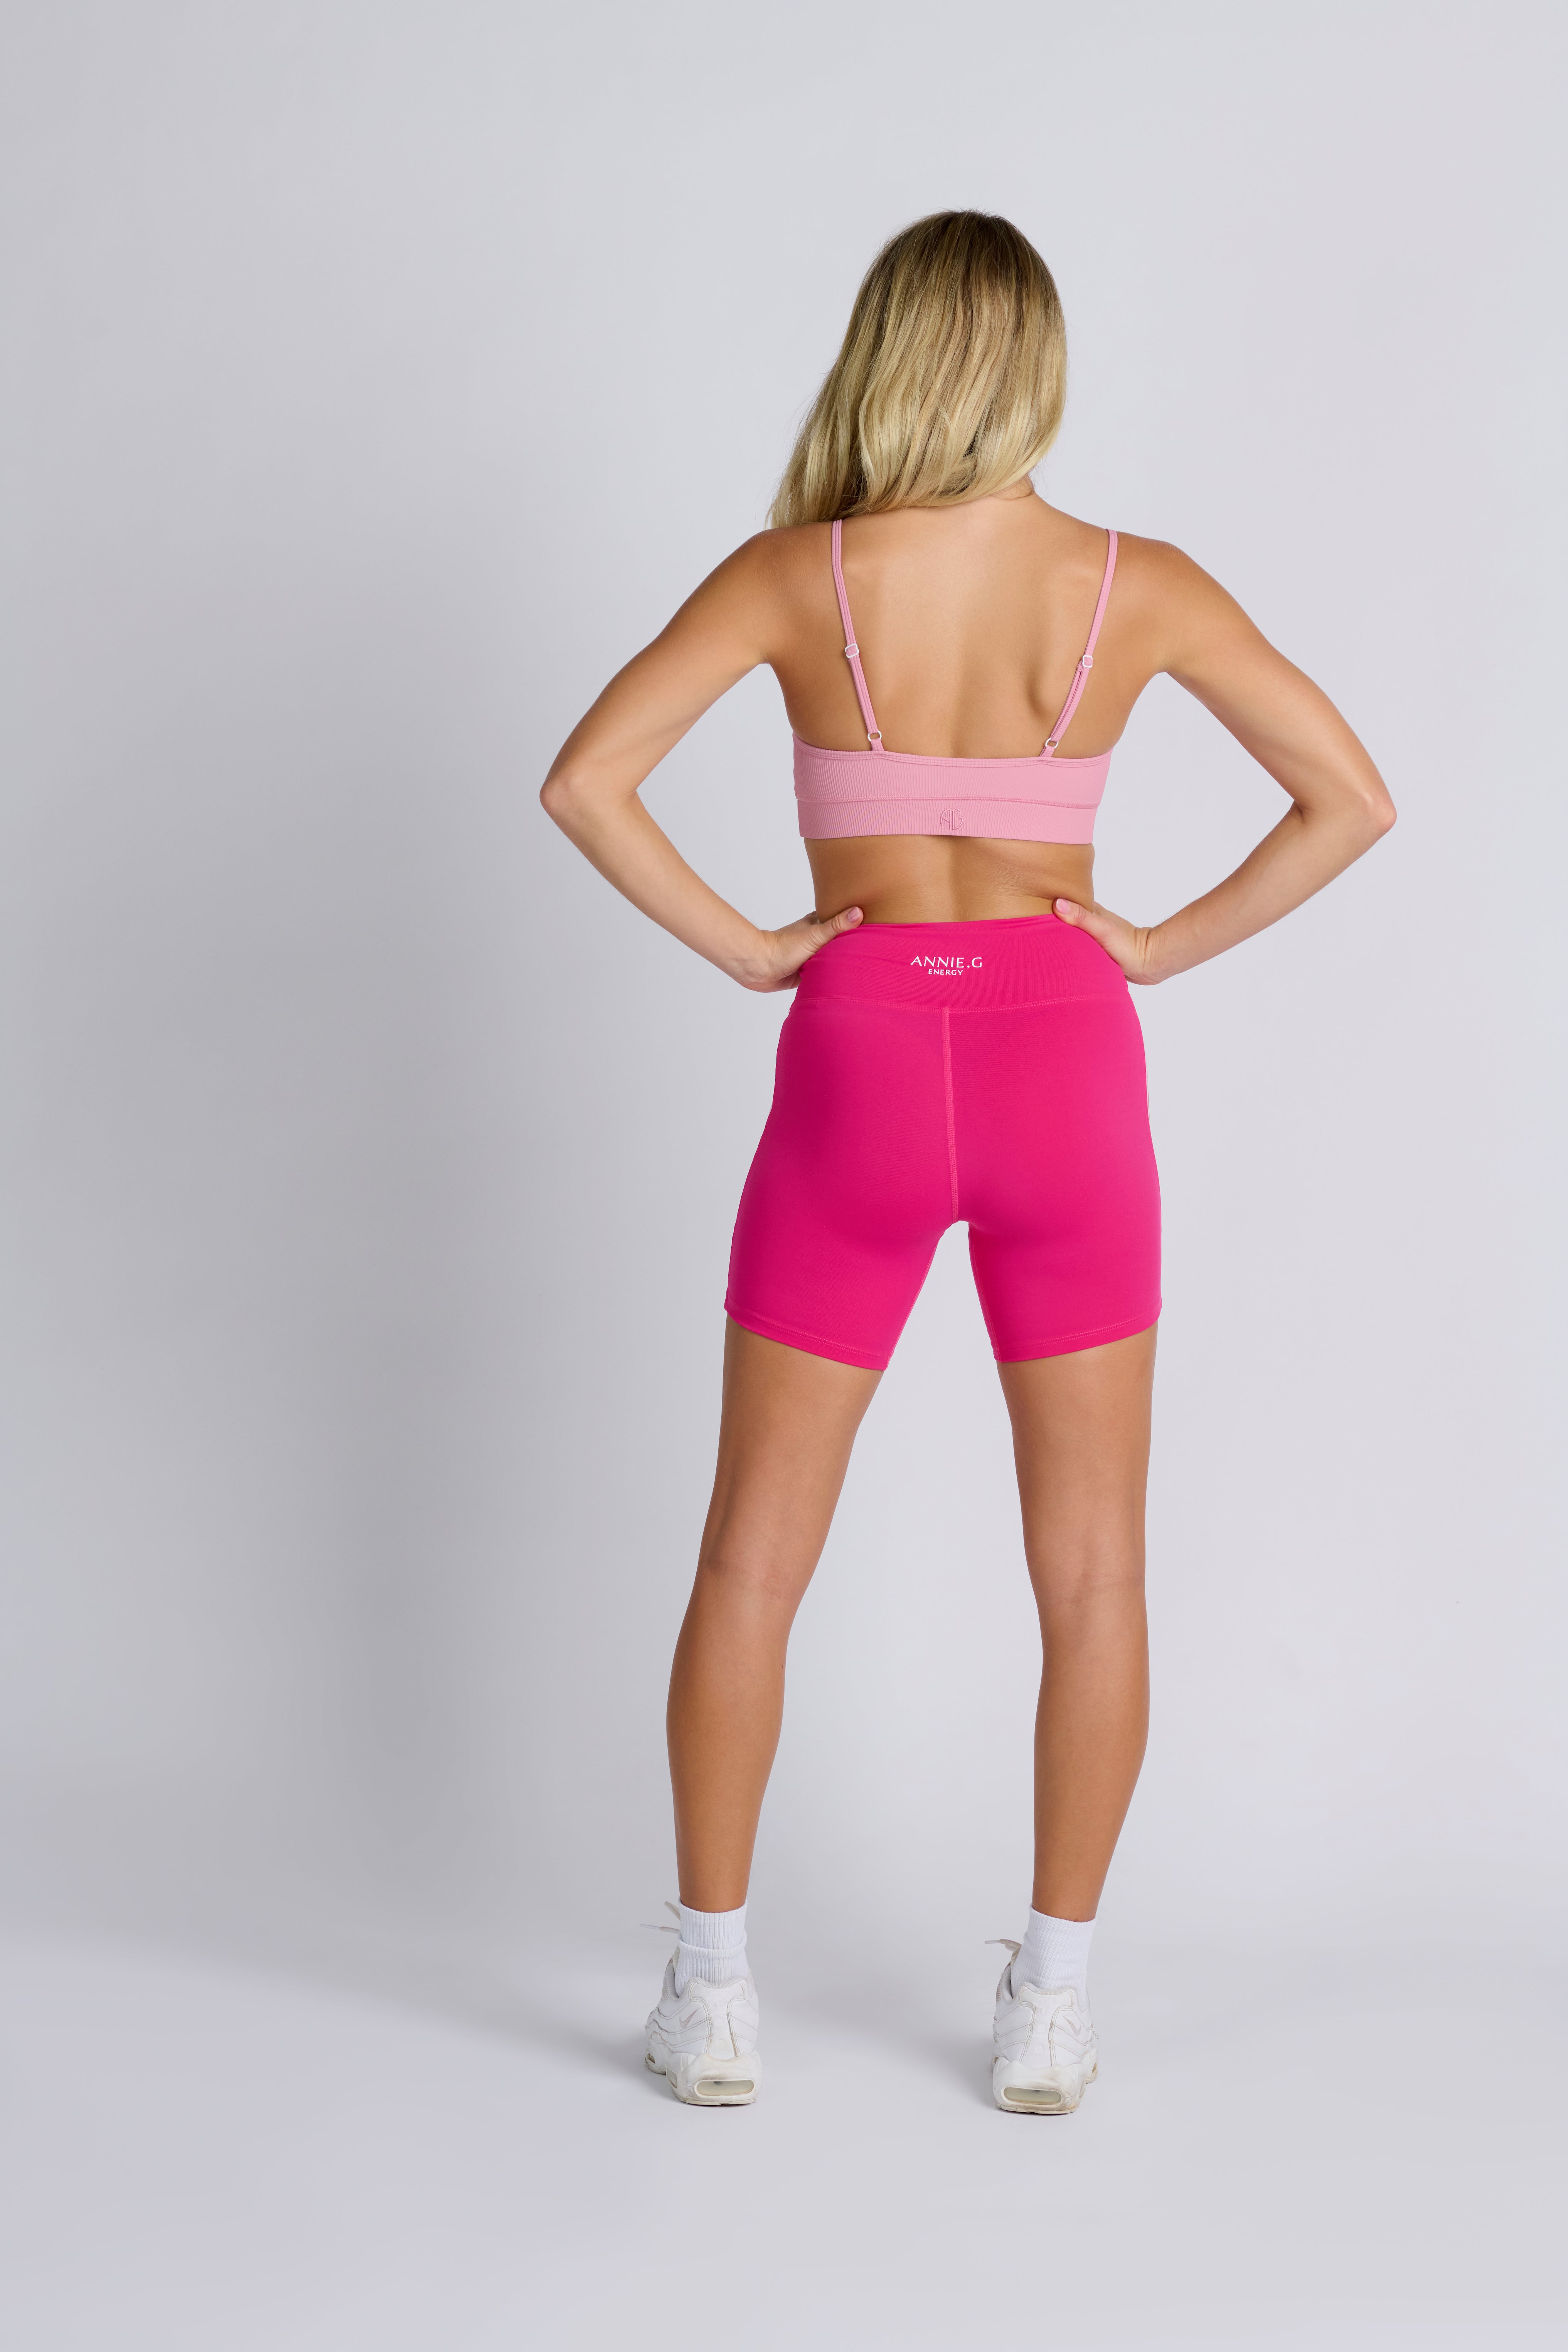 Girl's-back-wearing-pink-bike-shorts-and-pink-bra